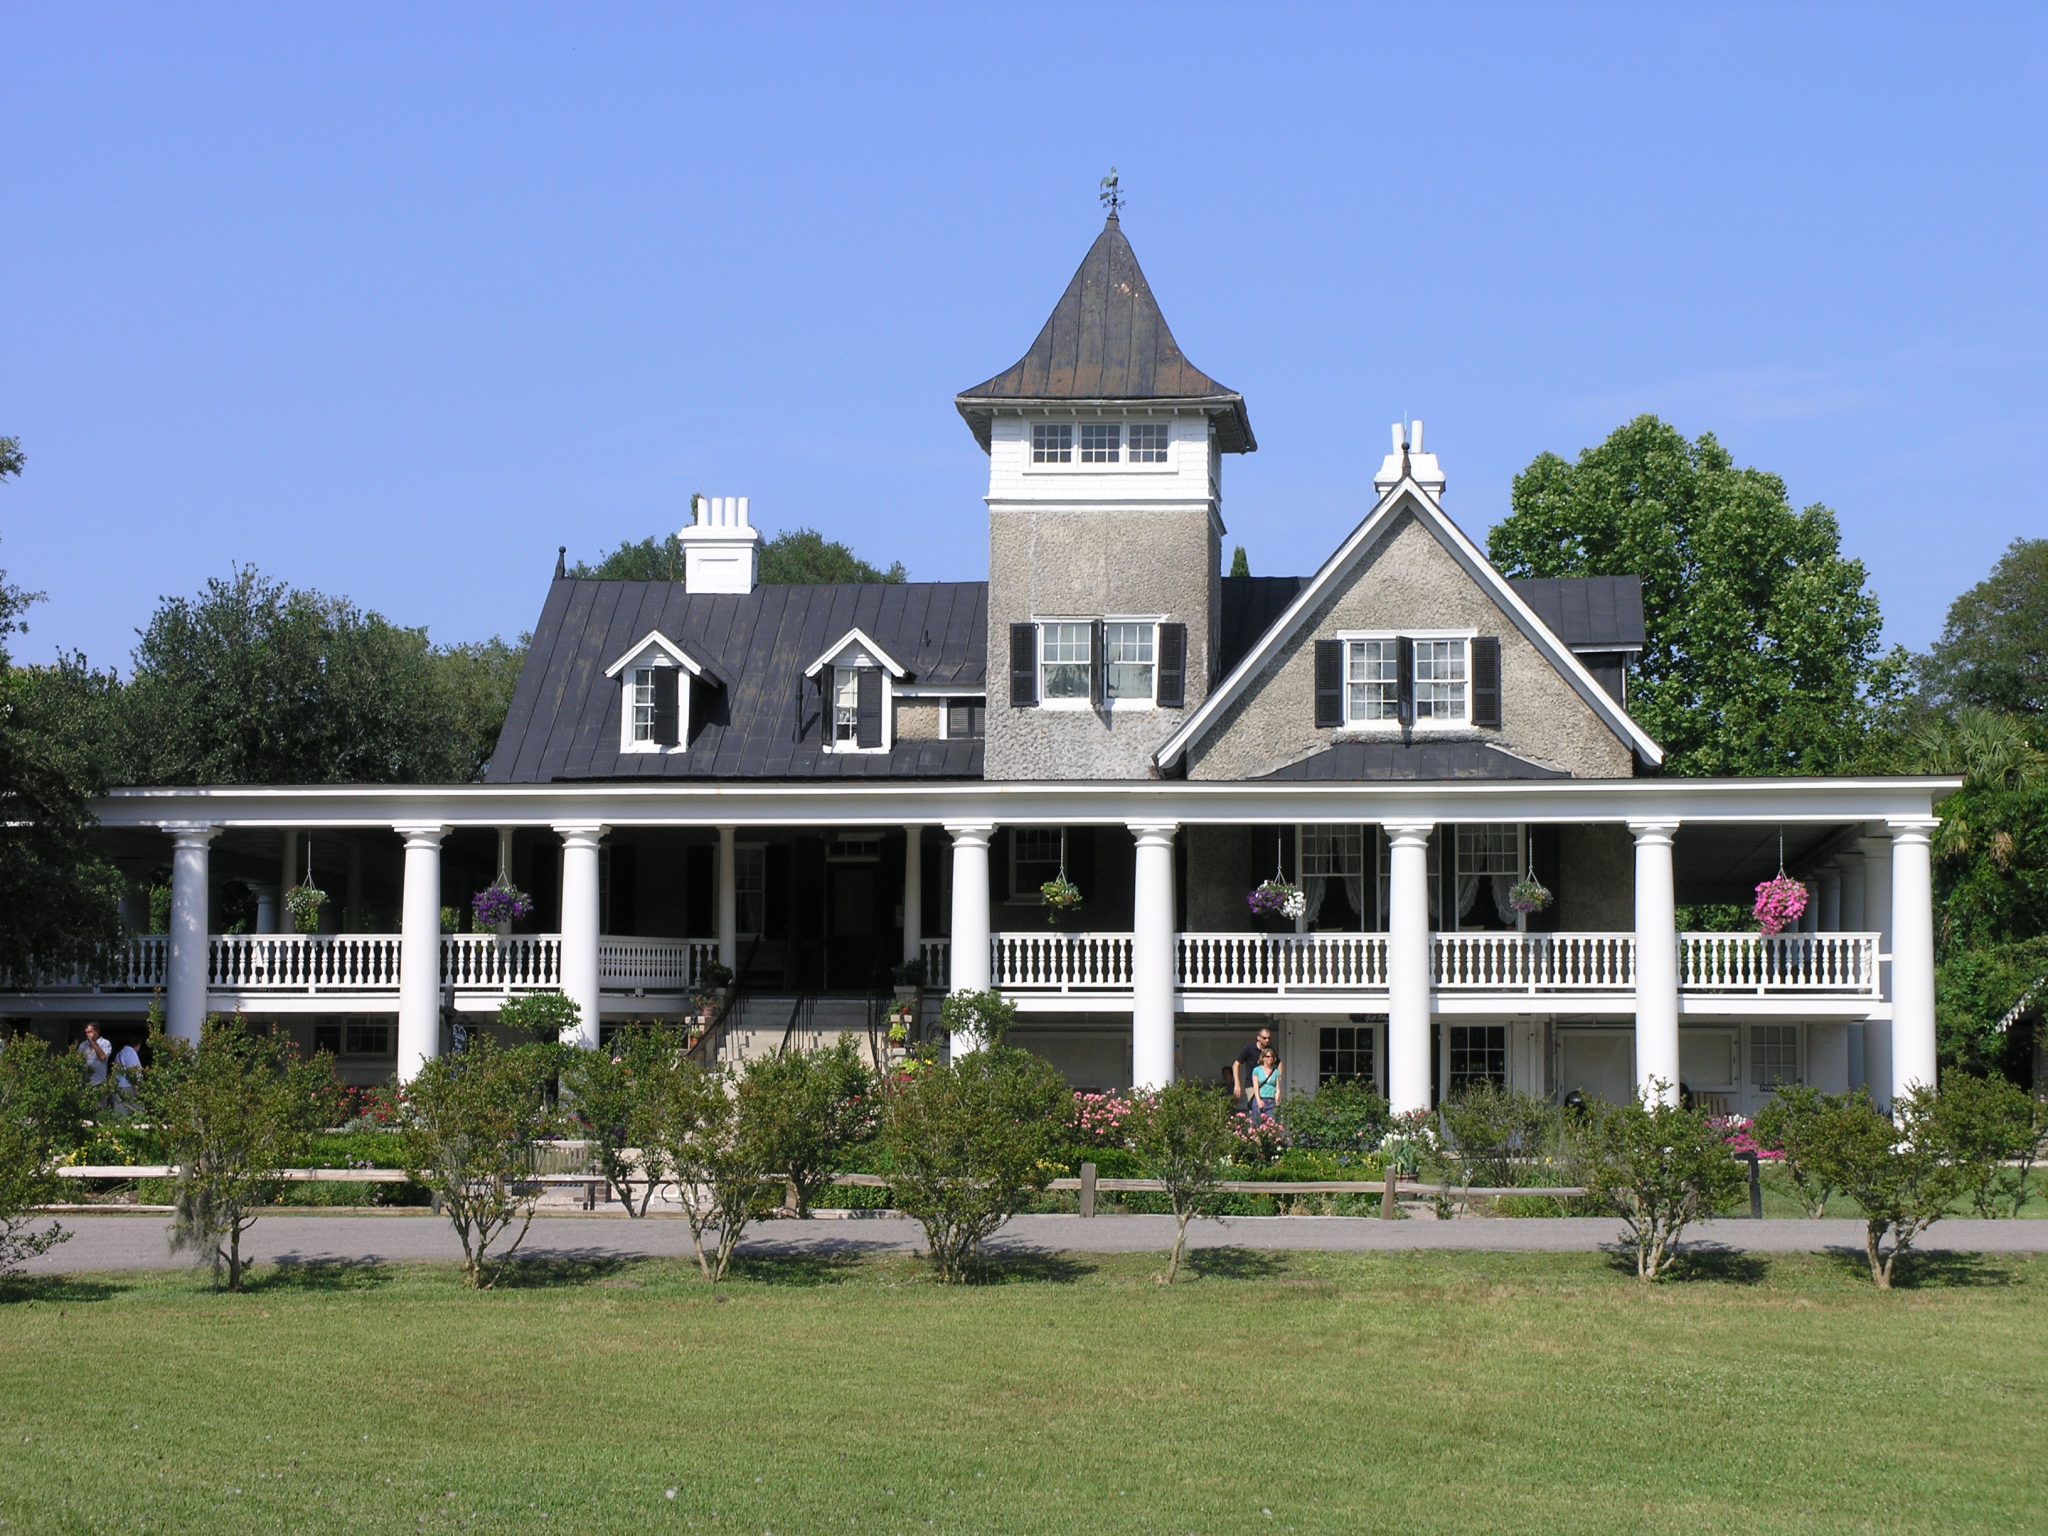 The Plantation House at Magnolia Gardens. Image courtesy of Magnolia Plantation.